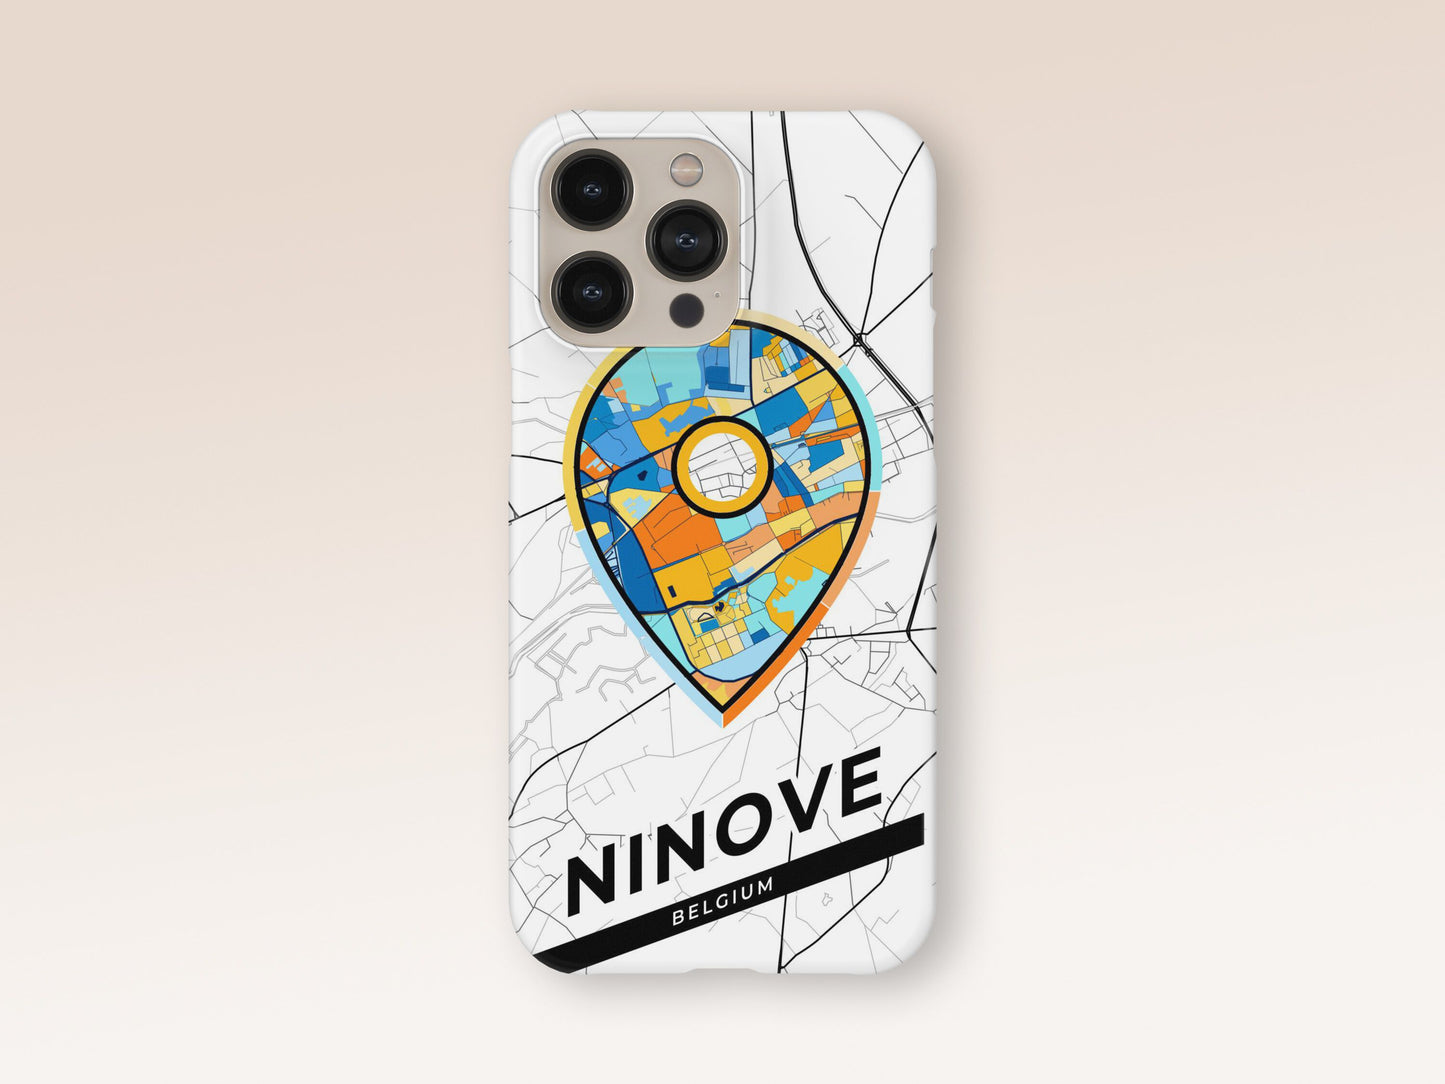 Ninove Belgium slim phone case with colorful icon. Birthday, wedding or housewarming gift. Couple match cases. 1